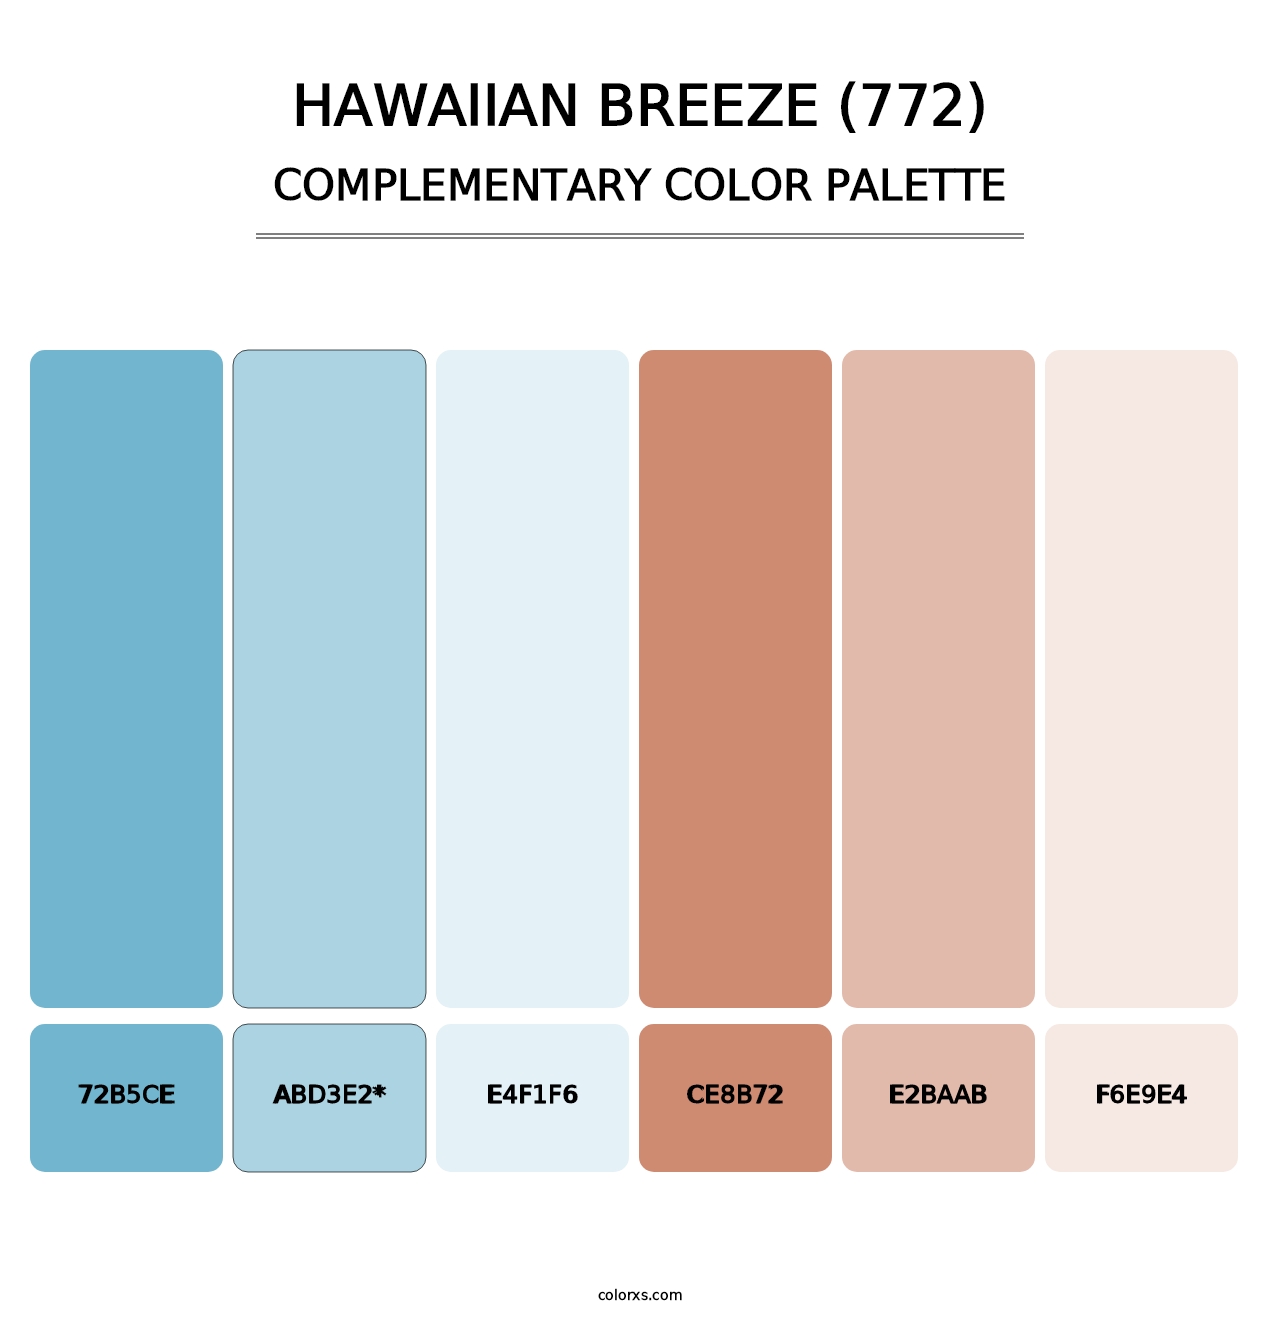 Hawaiian Breeze (772) - Complementary Color Palette